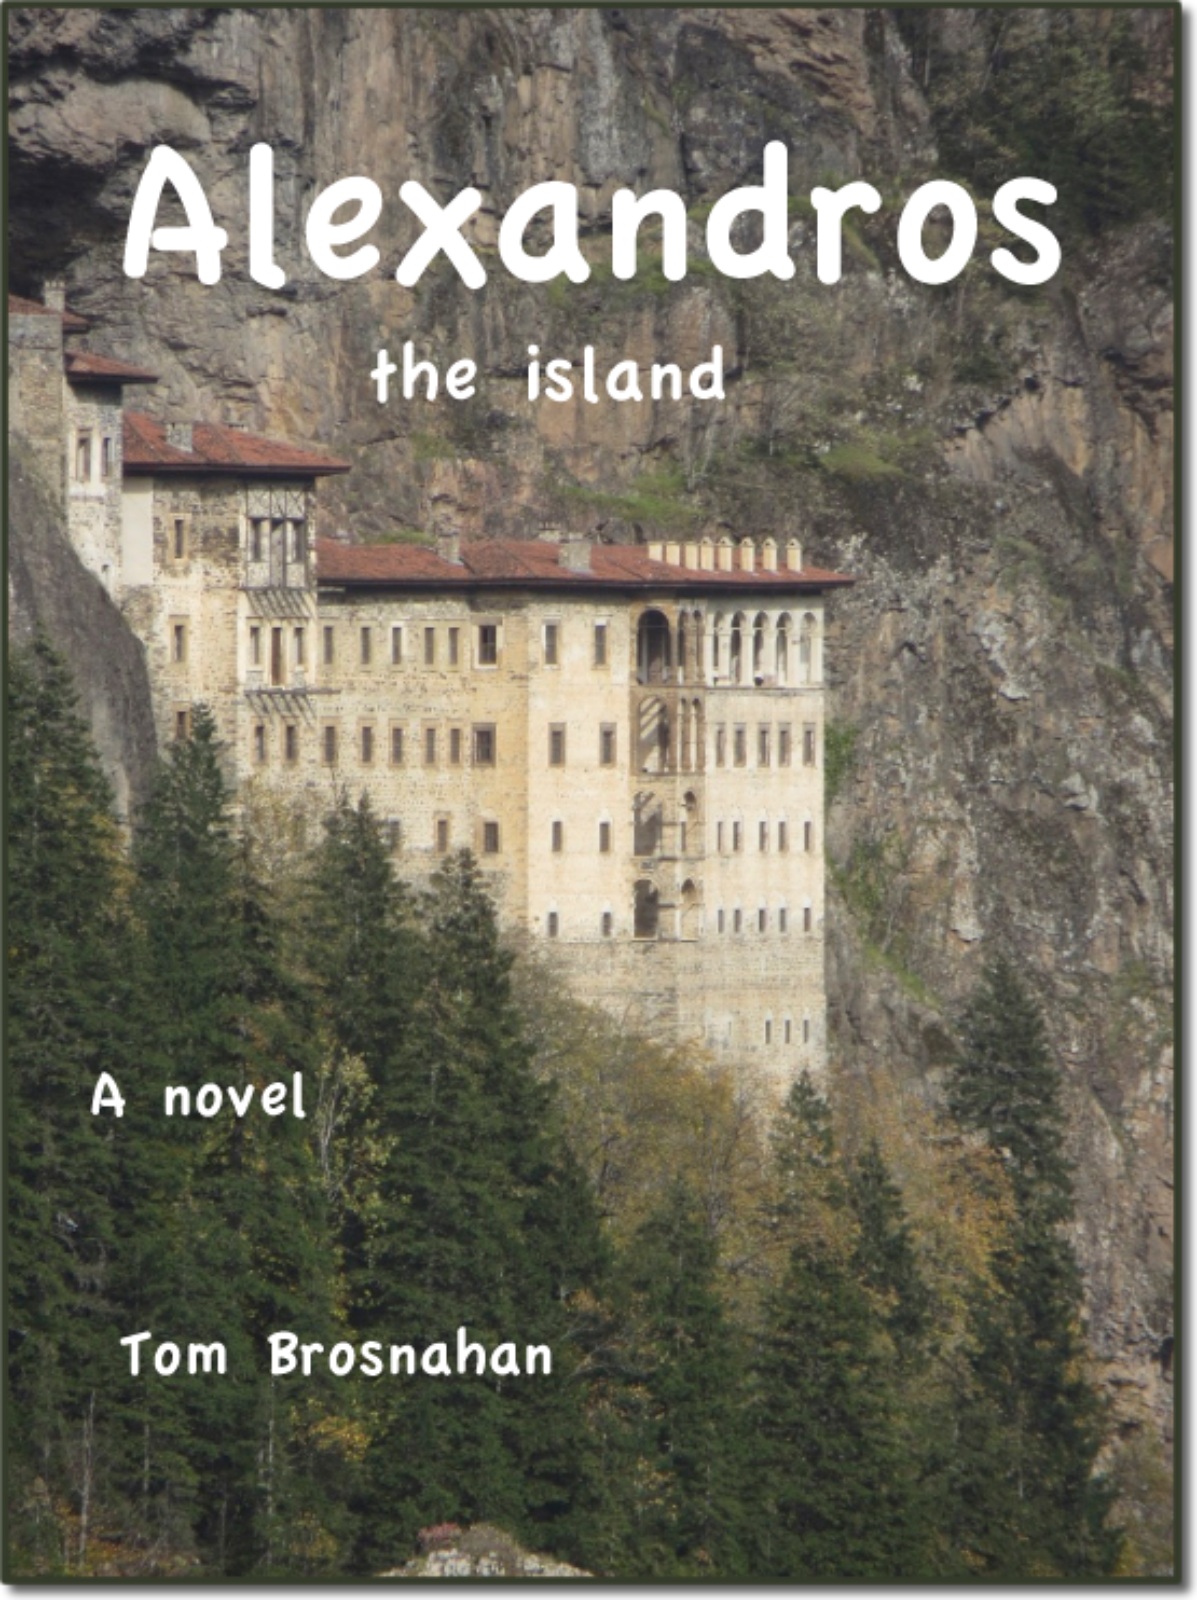 Alexandros - a novel, by Tom Brosnahan